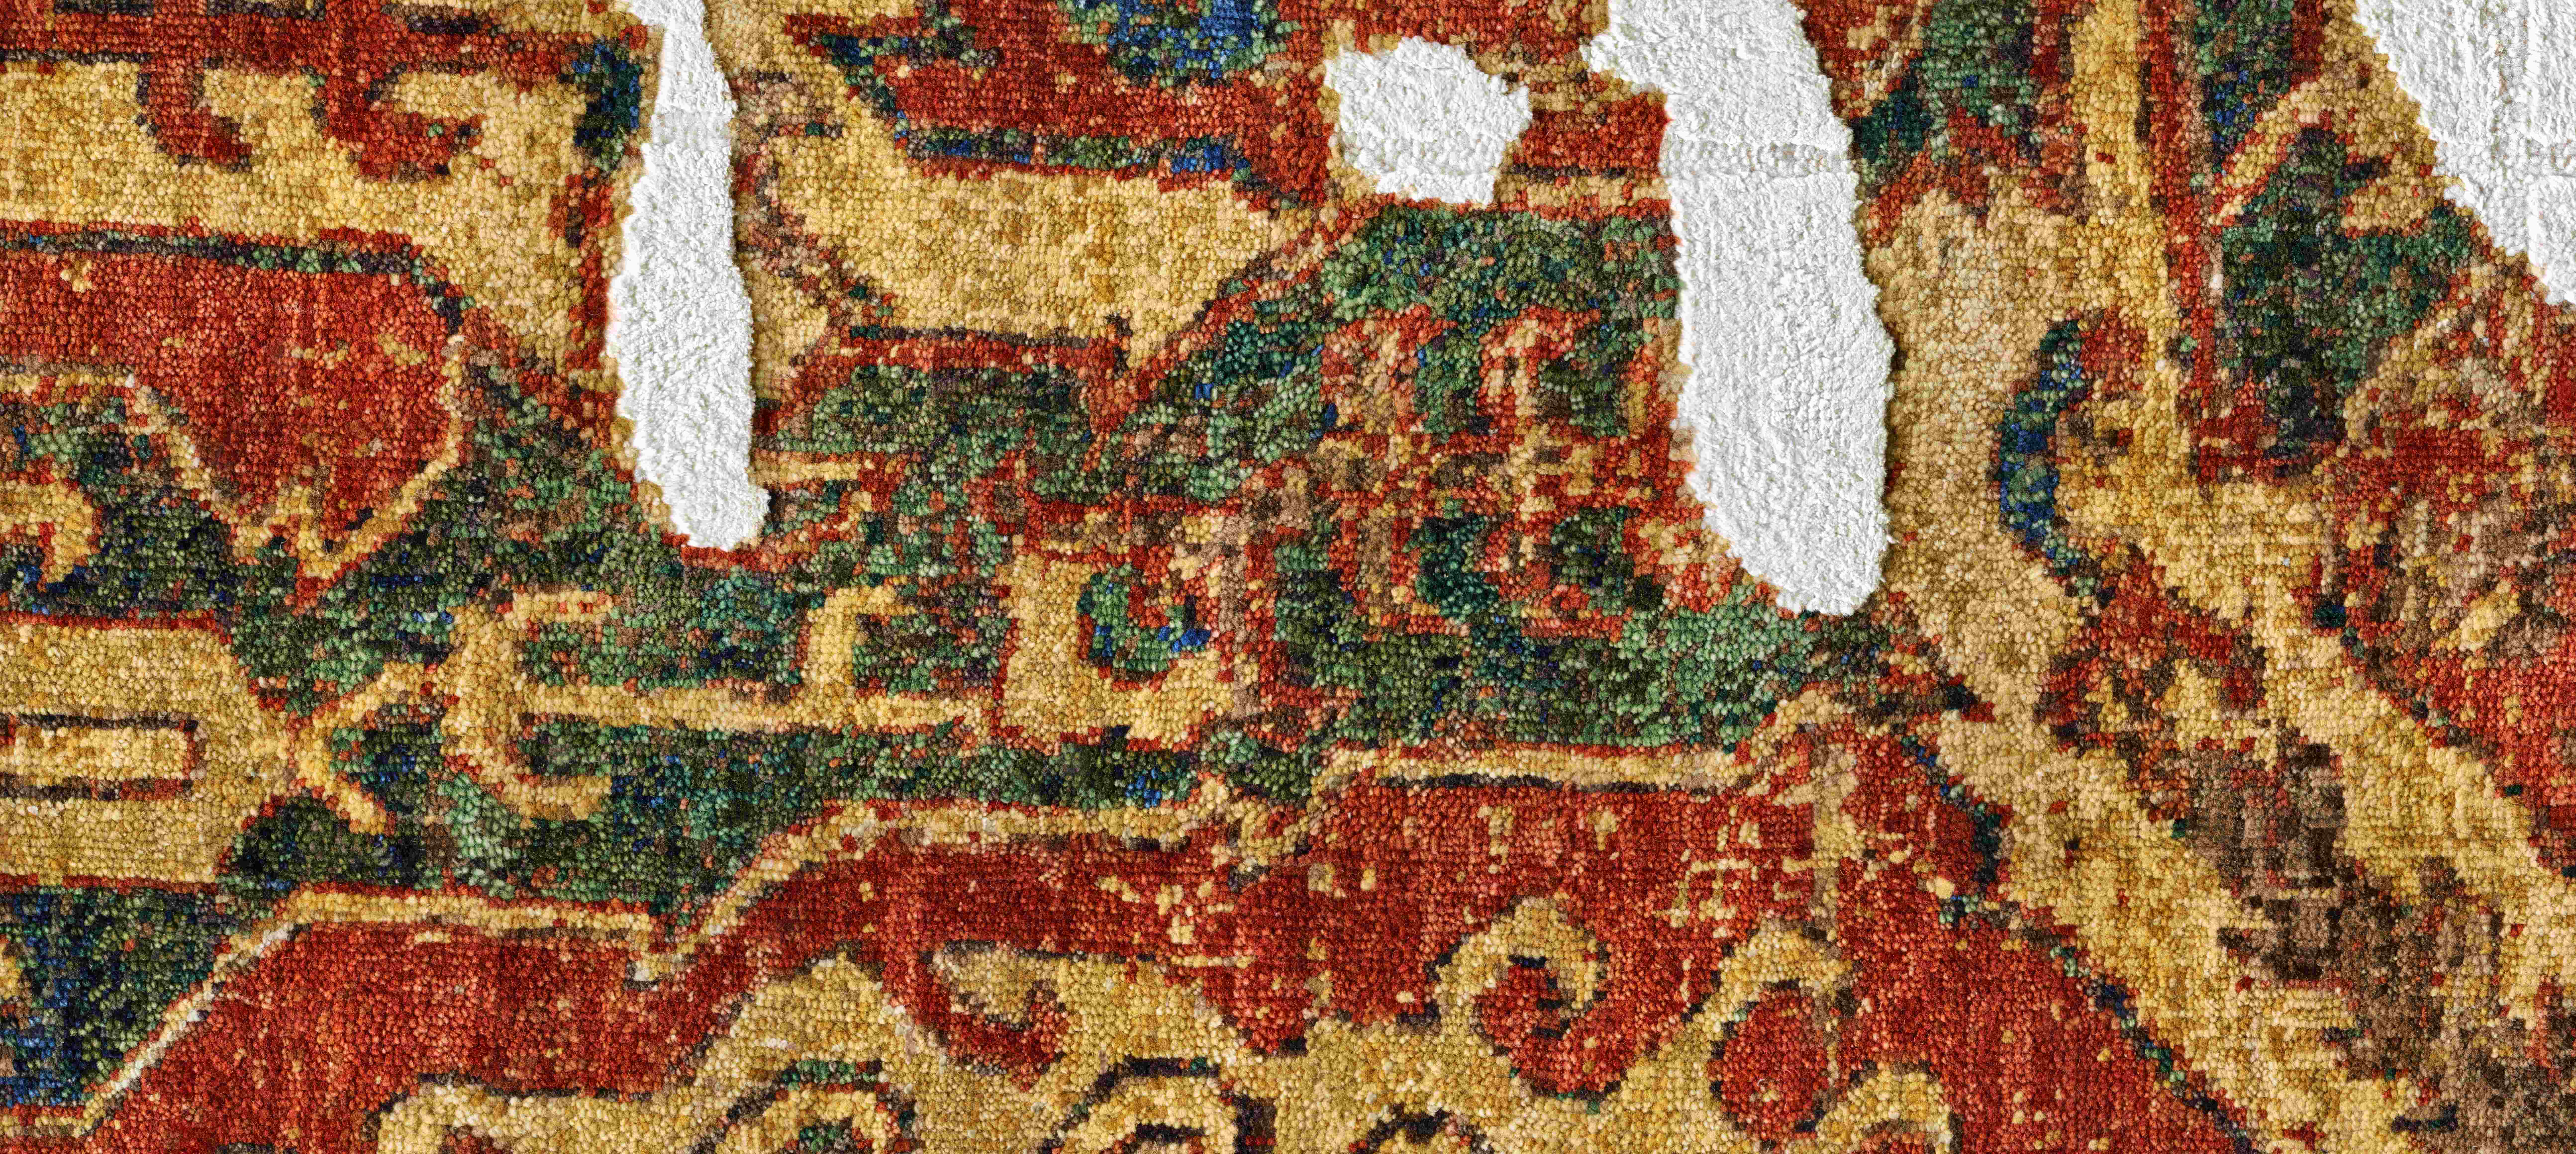 CulturalxCollabs: Fragment No. 14 © Museum für Islamische Kunst, Heiner Büld